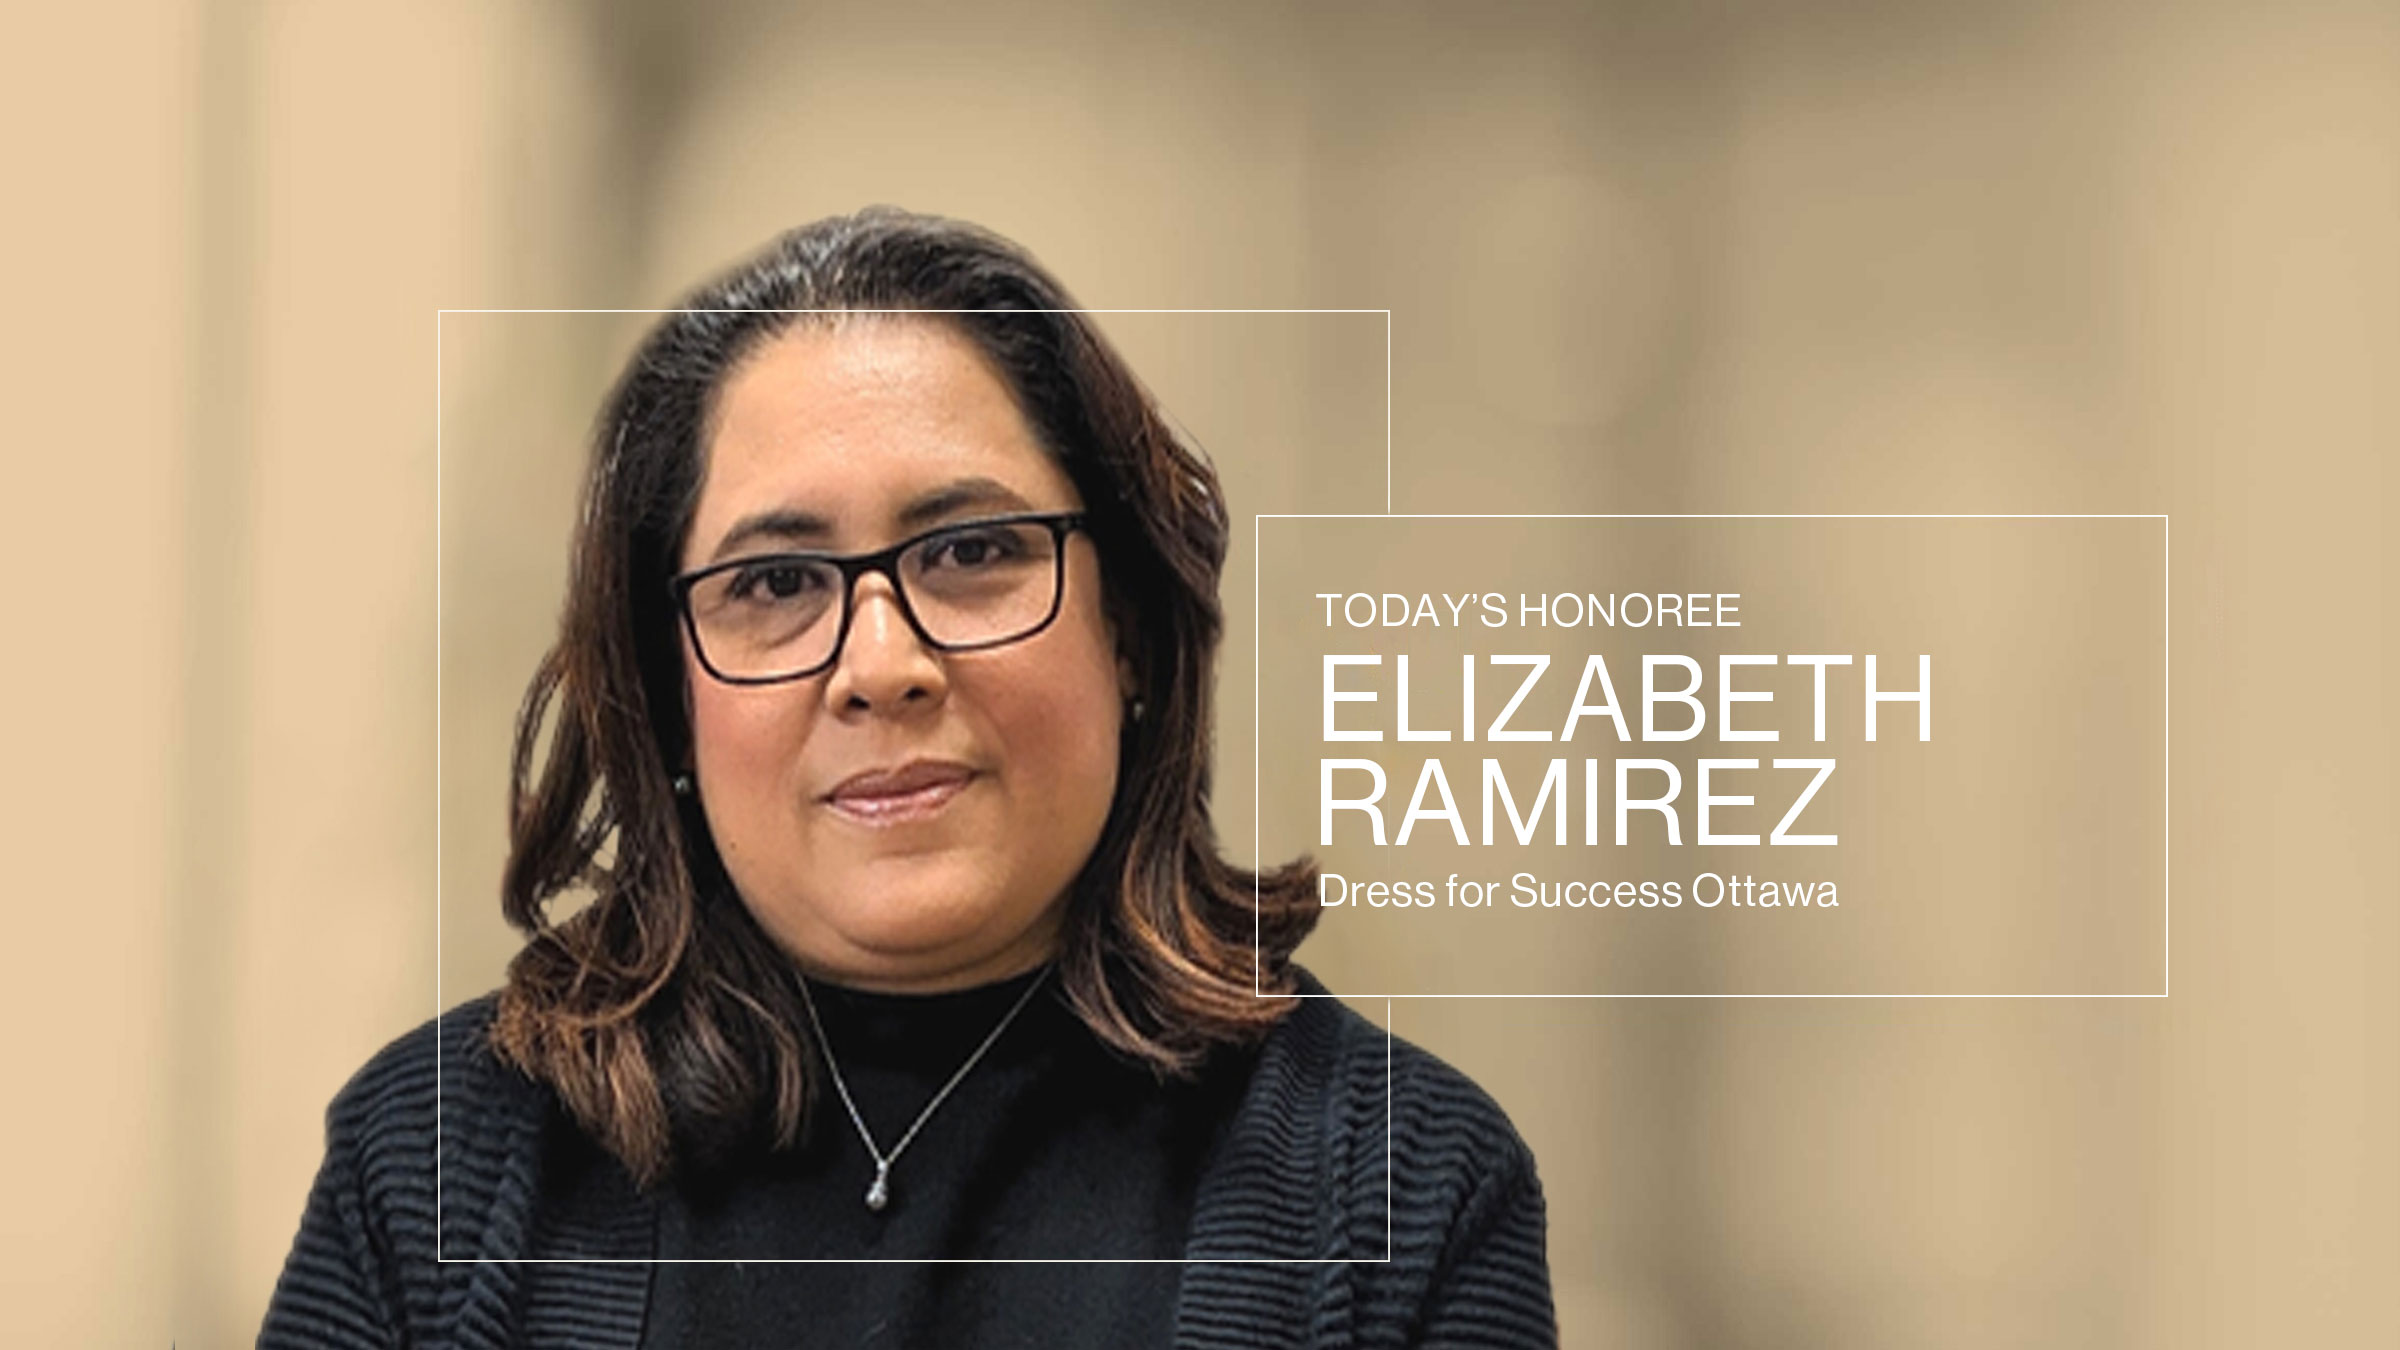 Elizabeth Ramirez